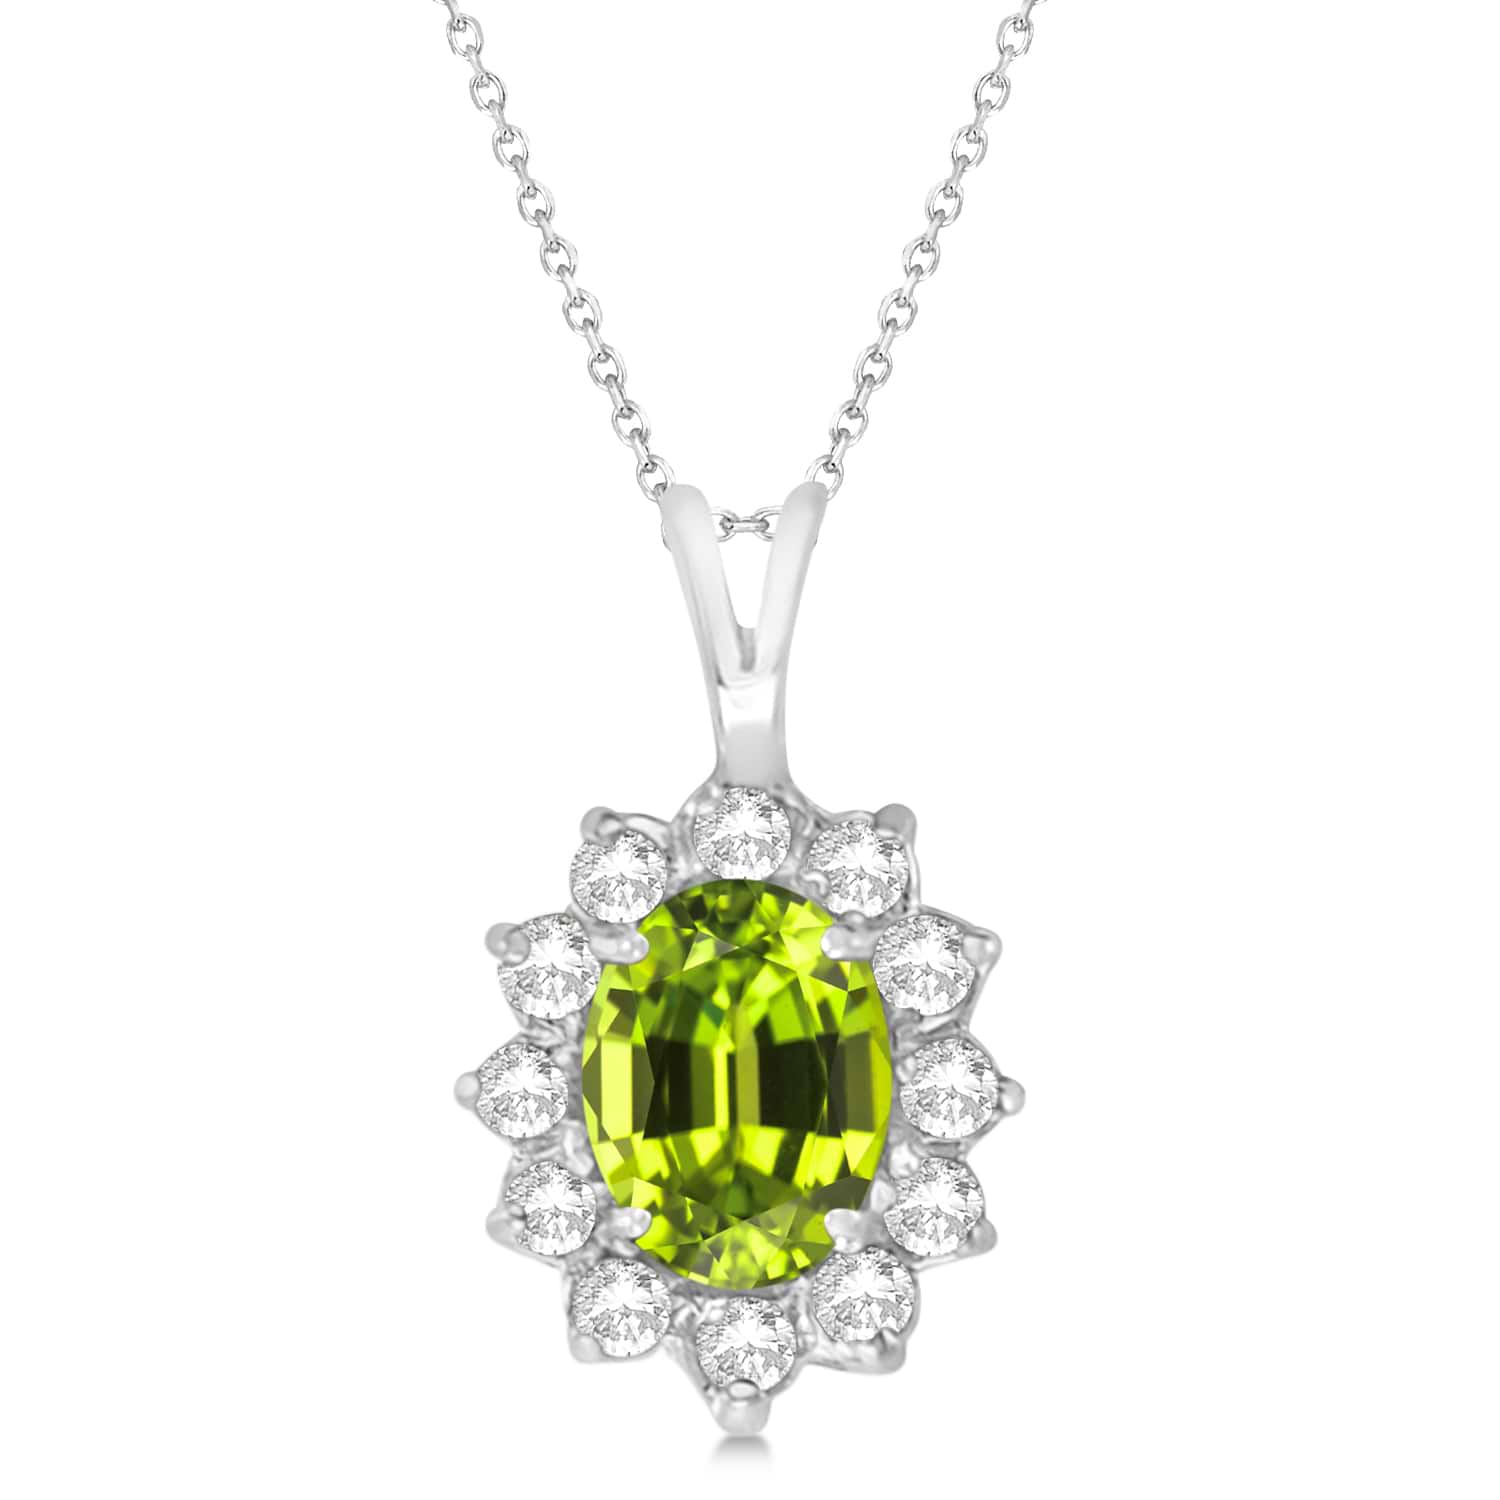 Peridot & Diamond Accented Pendant Necklace 14k White Gold (1.70ctw)